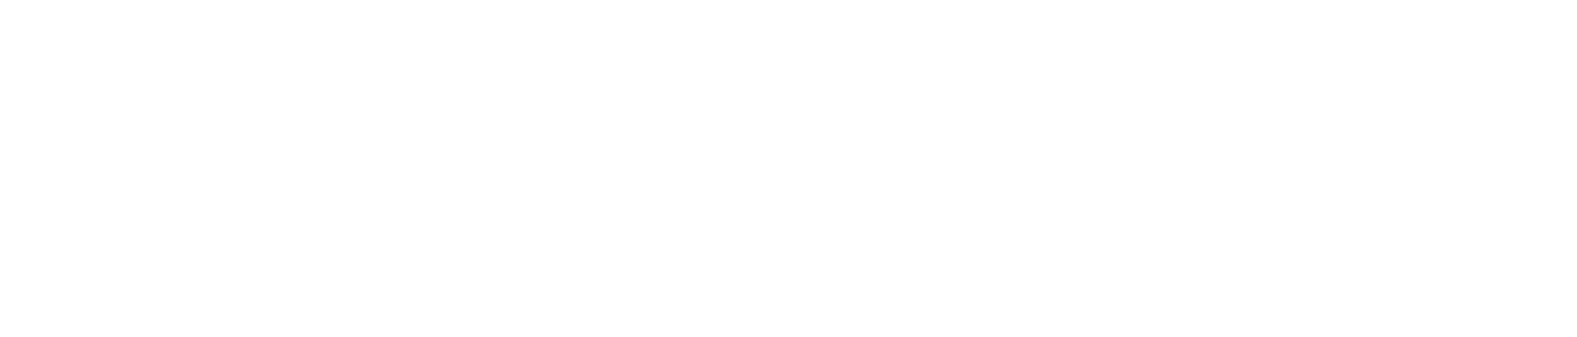 Fresenius Medical Care Logo groß für dunkle Hintergründe (transparentes PNG)